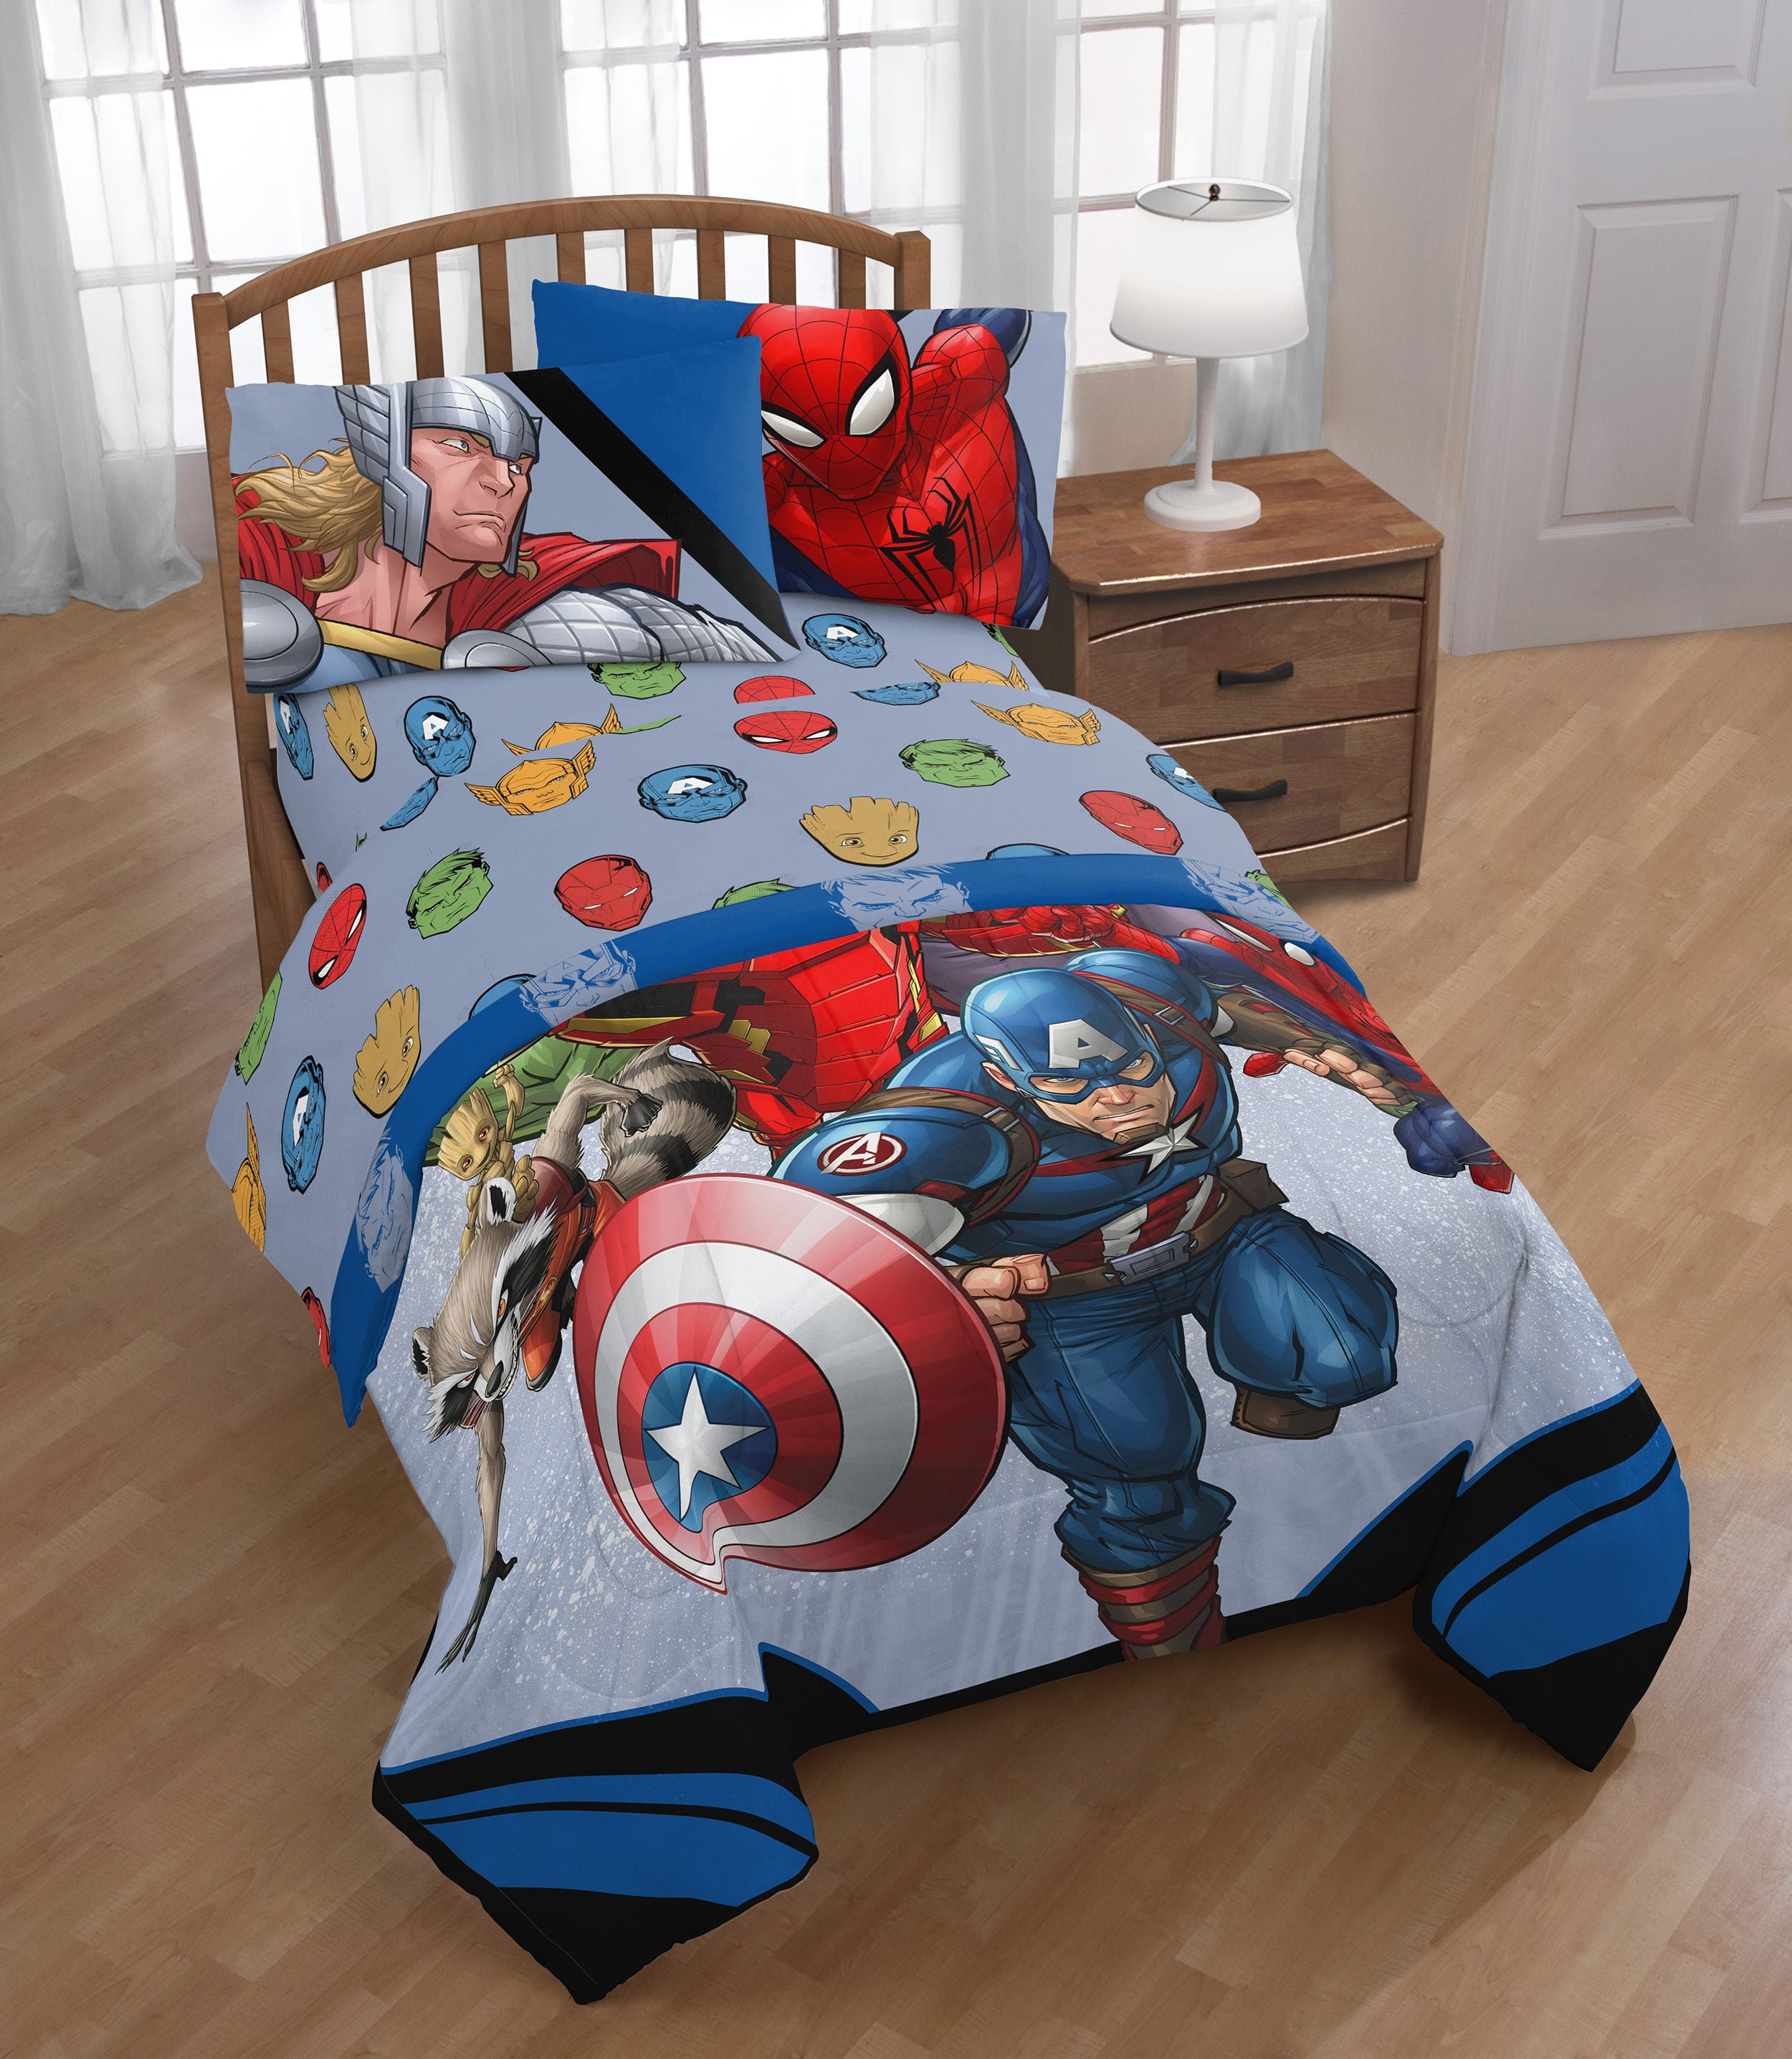 New Marvel Avengers Full Size Bed Sheet Set 4 Piece Superhero Bedding Super Soft 